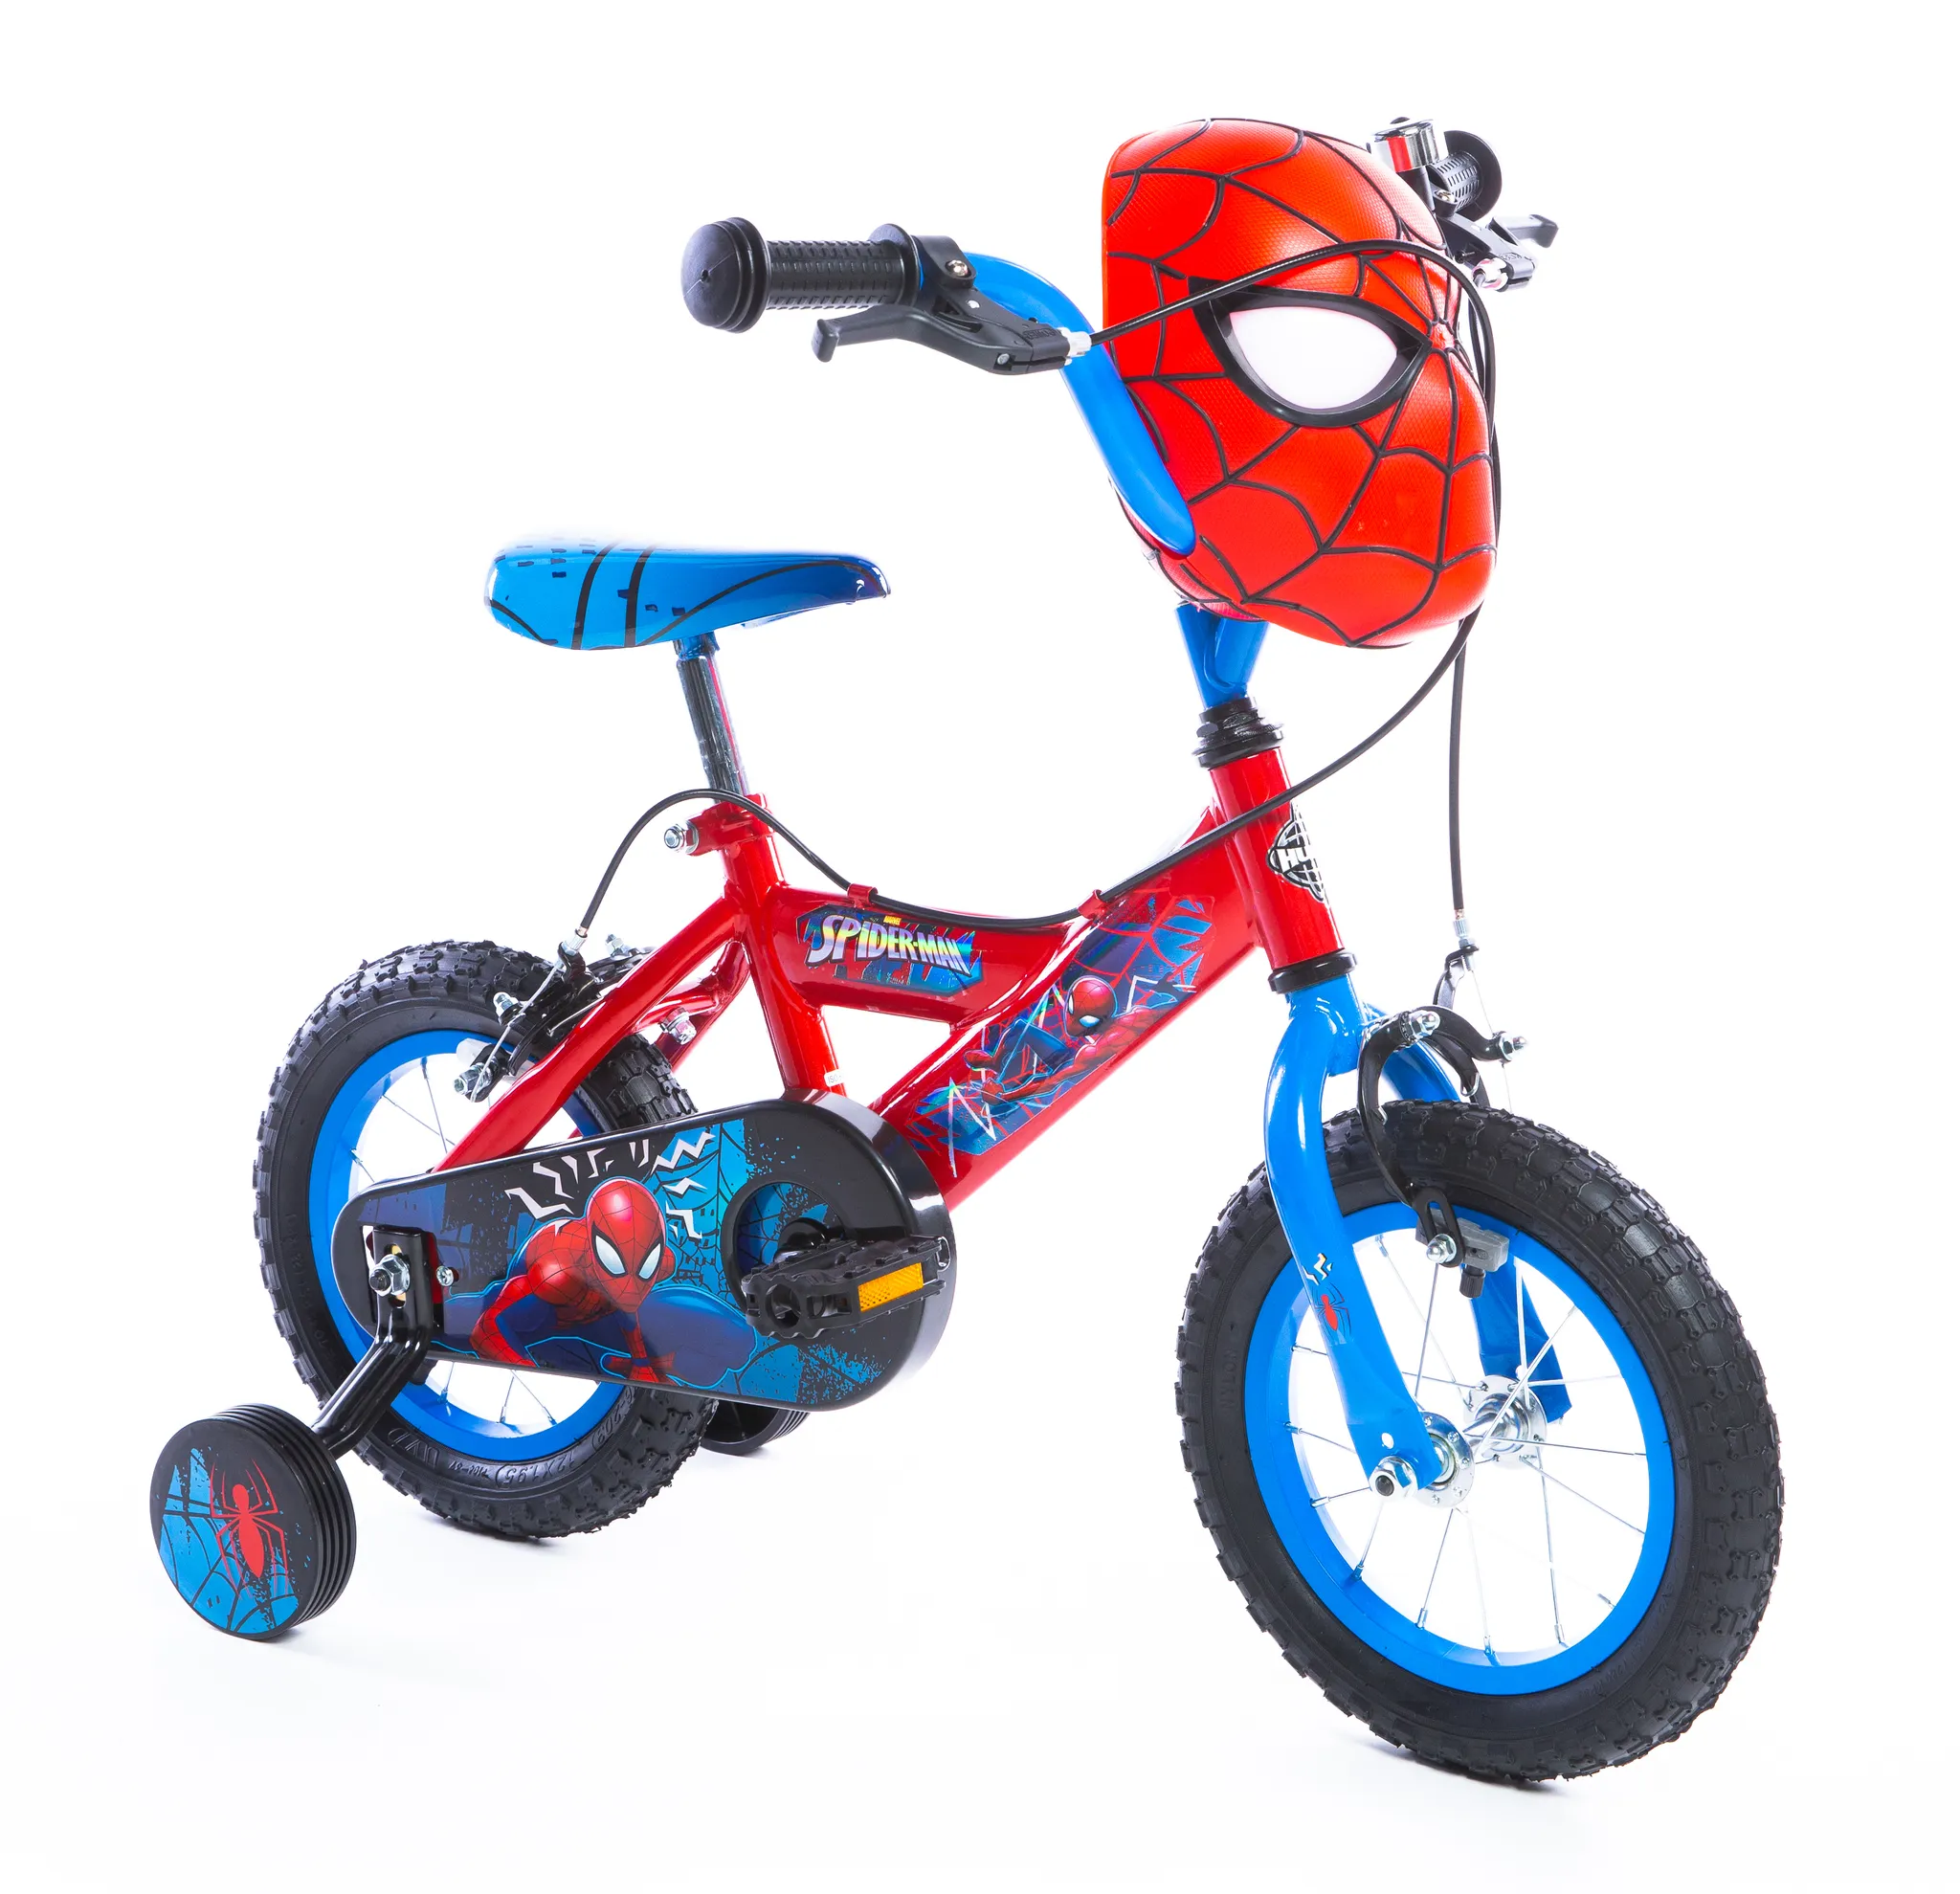 Versandkostenfreies Fest ✶ Im Gange! Huffy Marvel Spider-Man 12 Fahrrad, Zoll